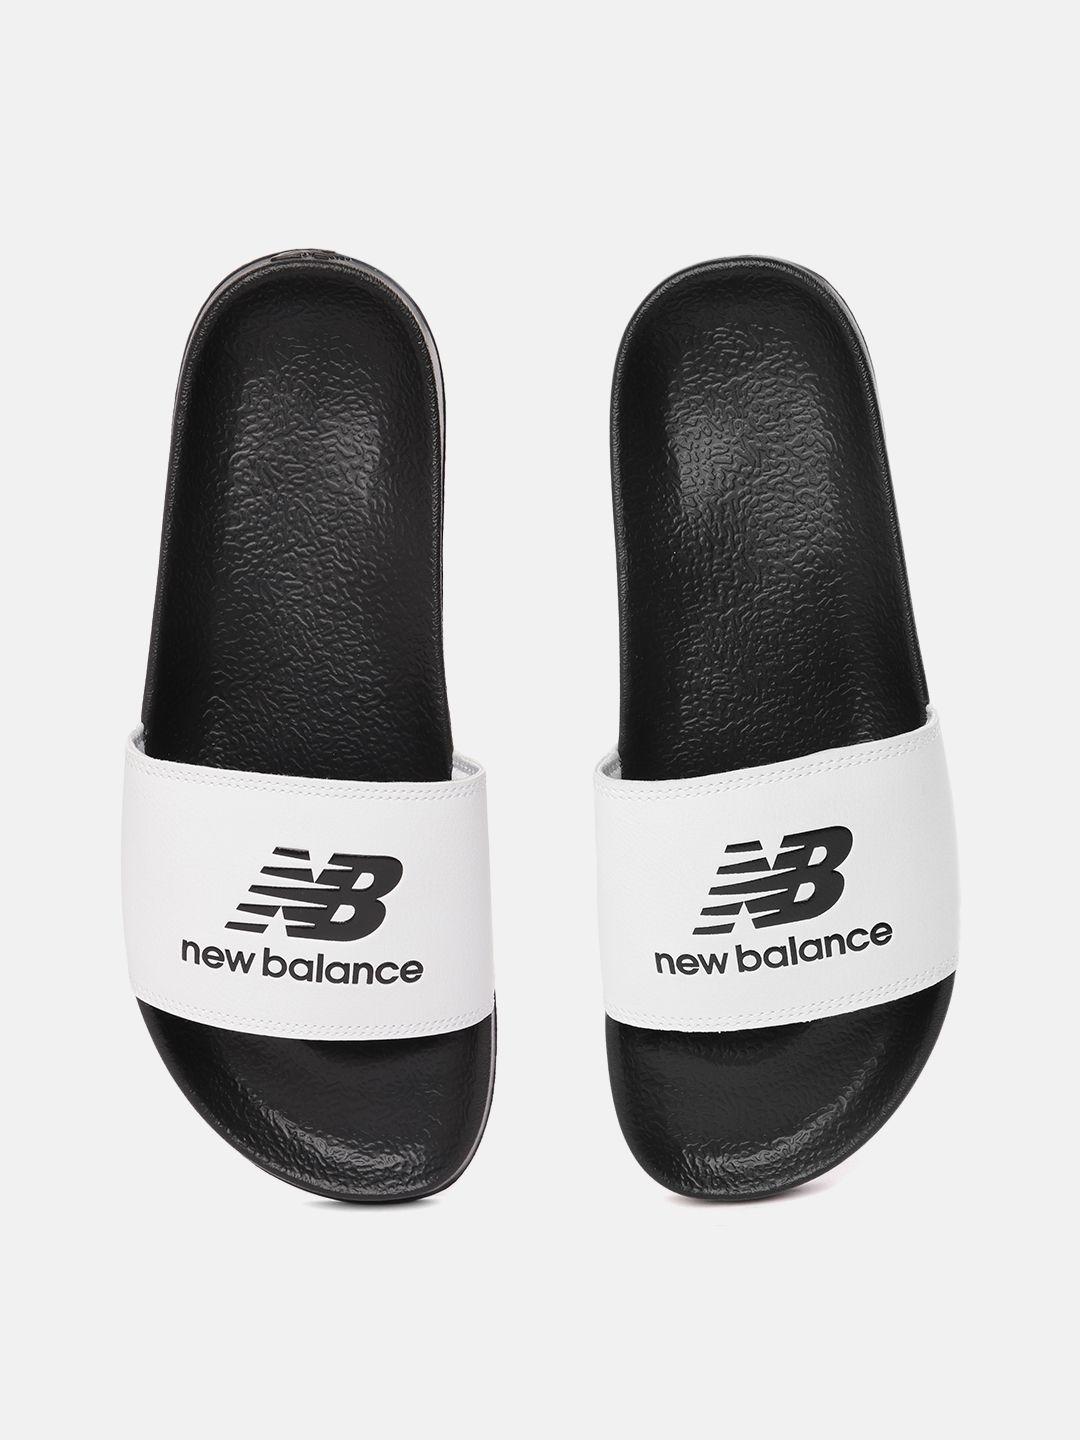 new balance men brand logo printed sliders